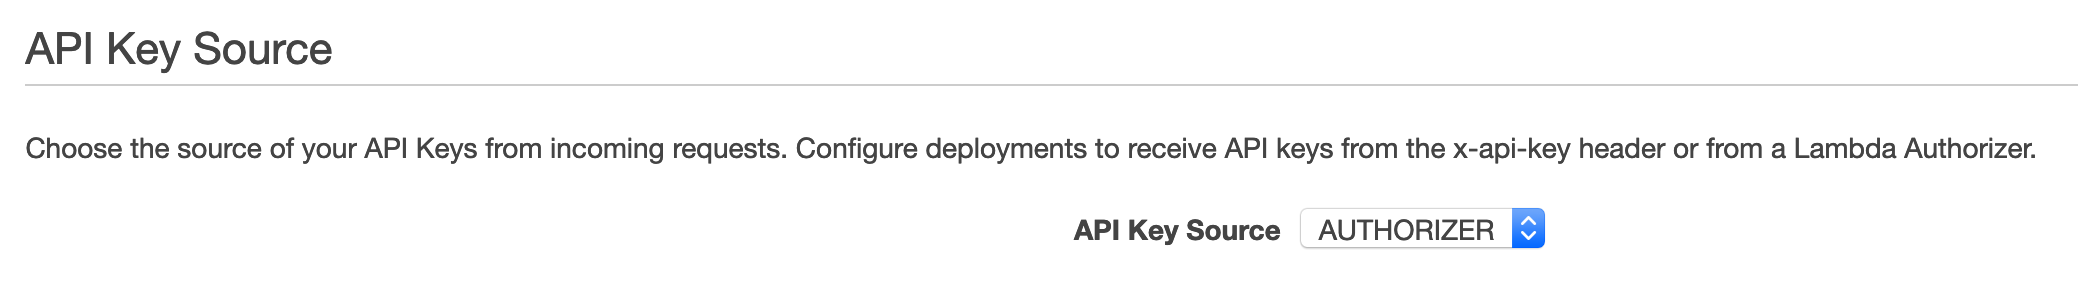 API Key Source Setting